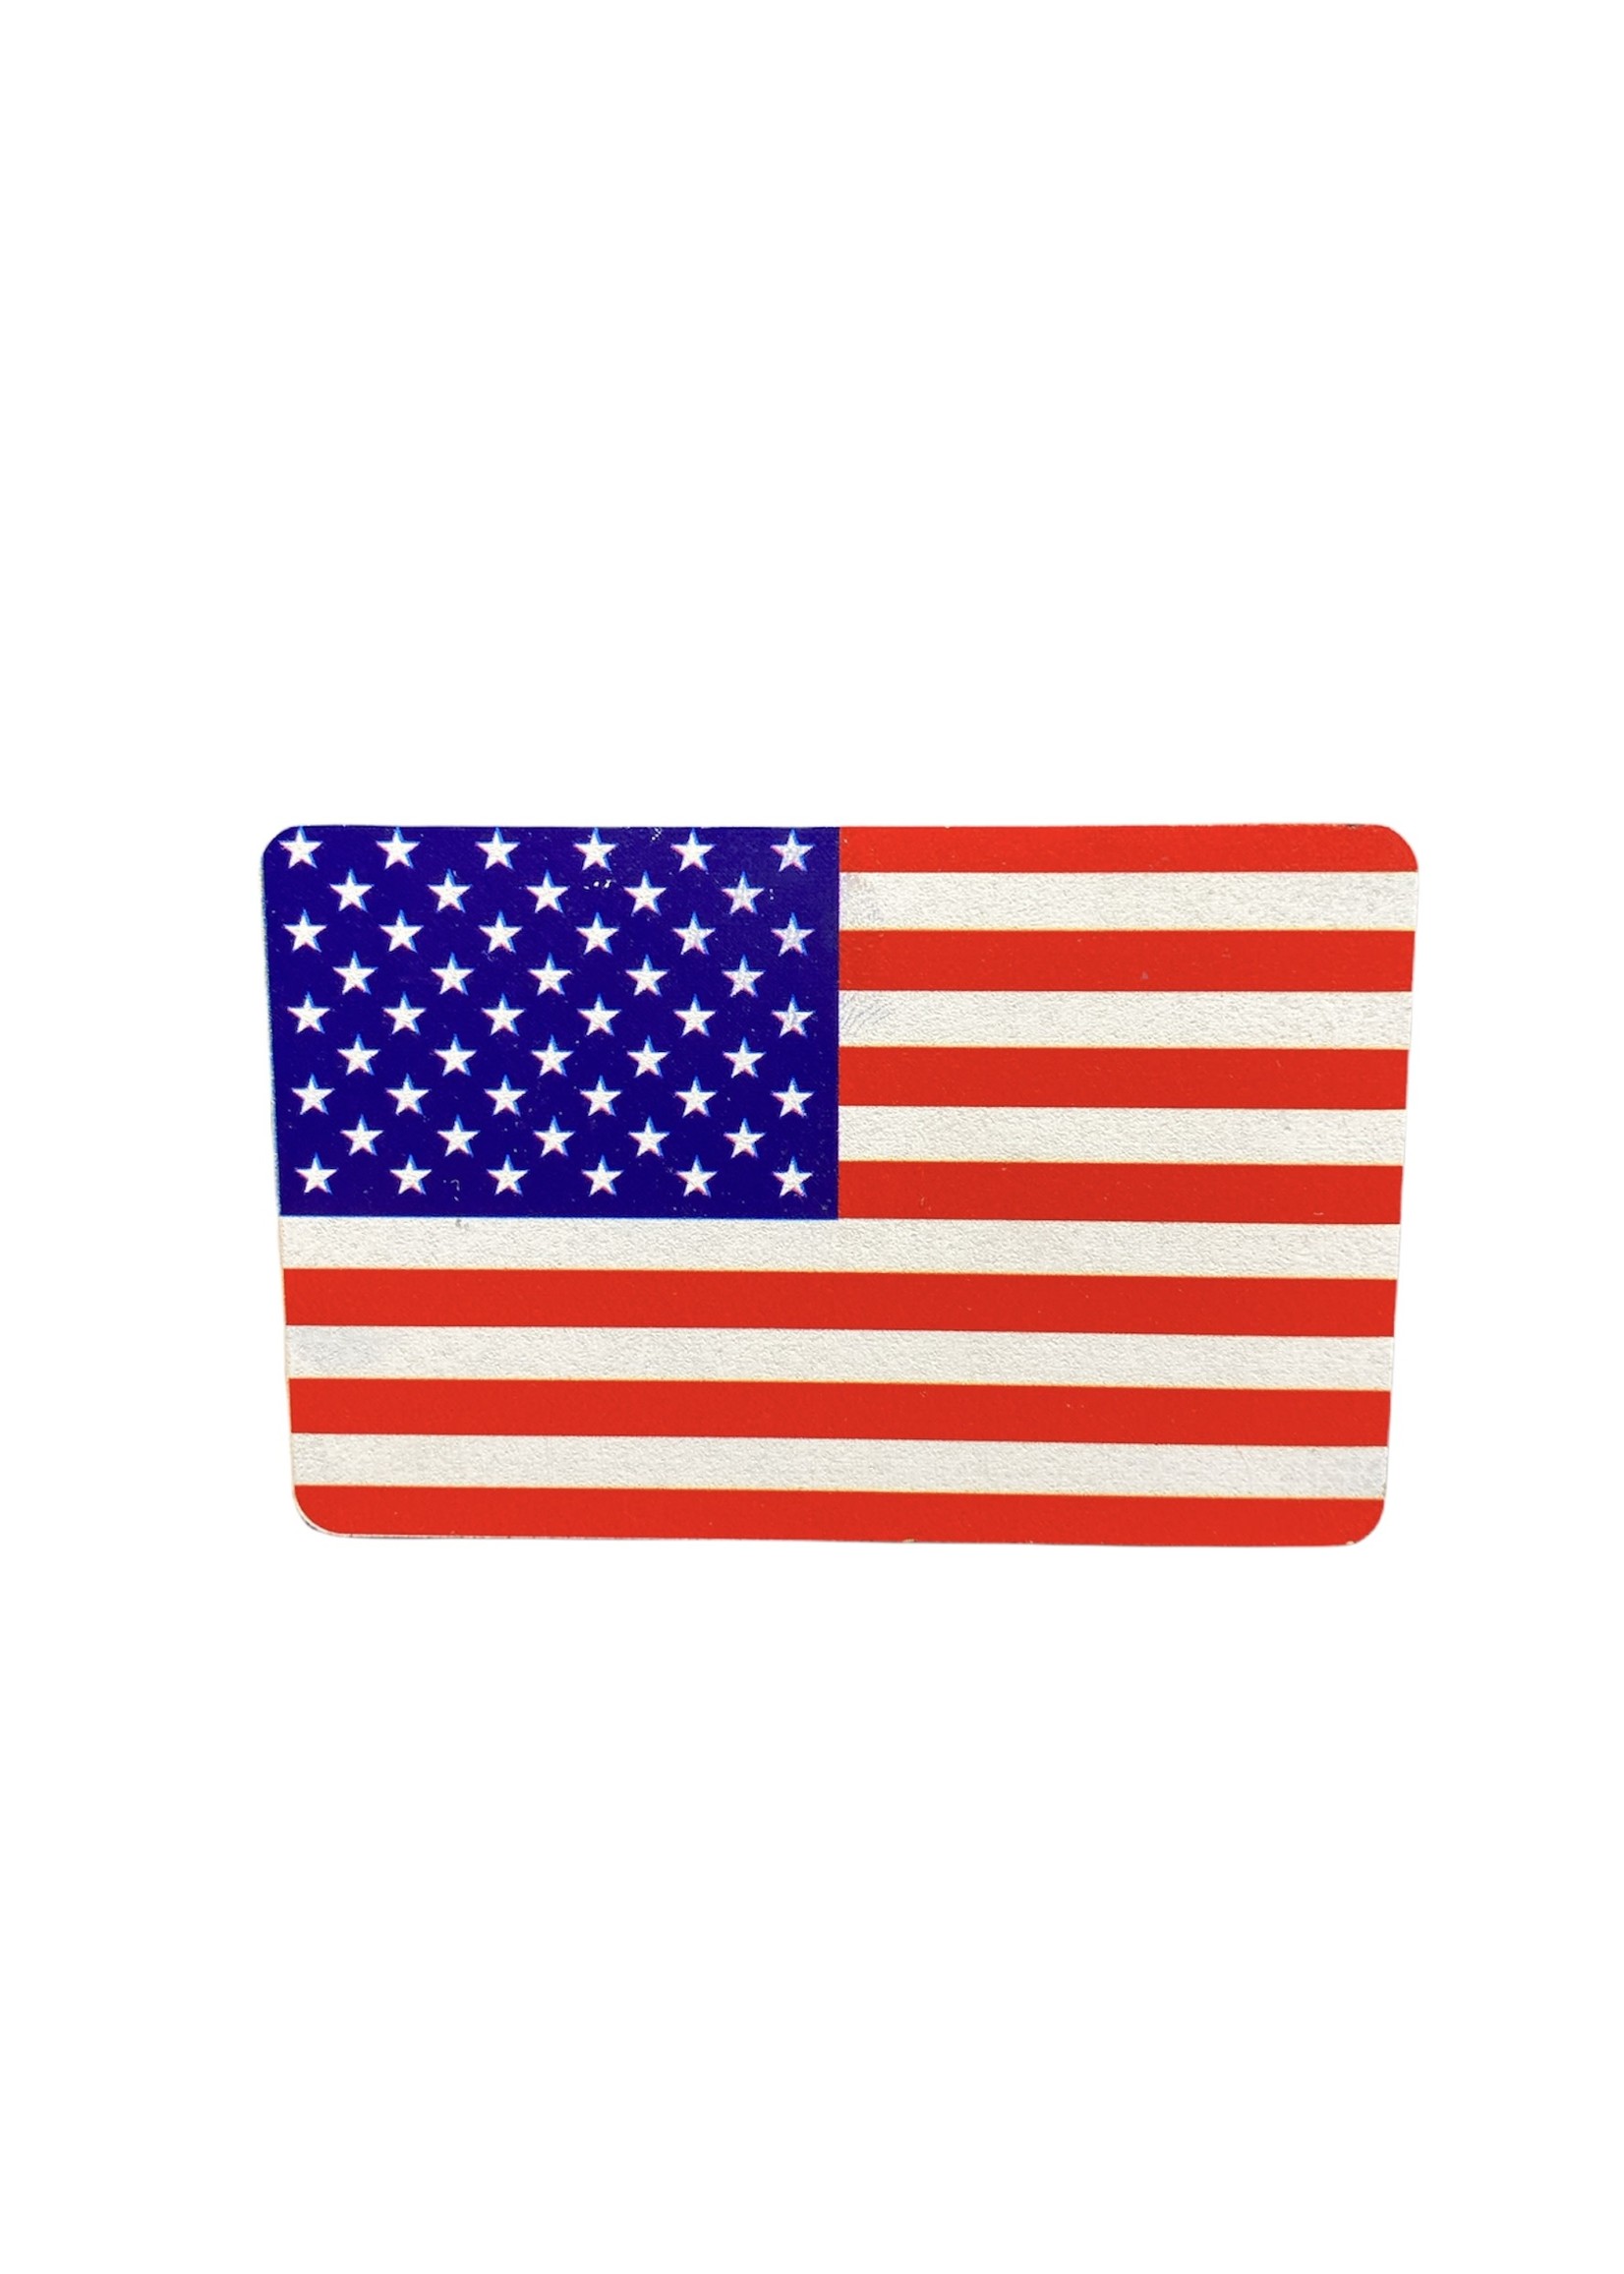 Magnet (US Flag)